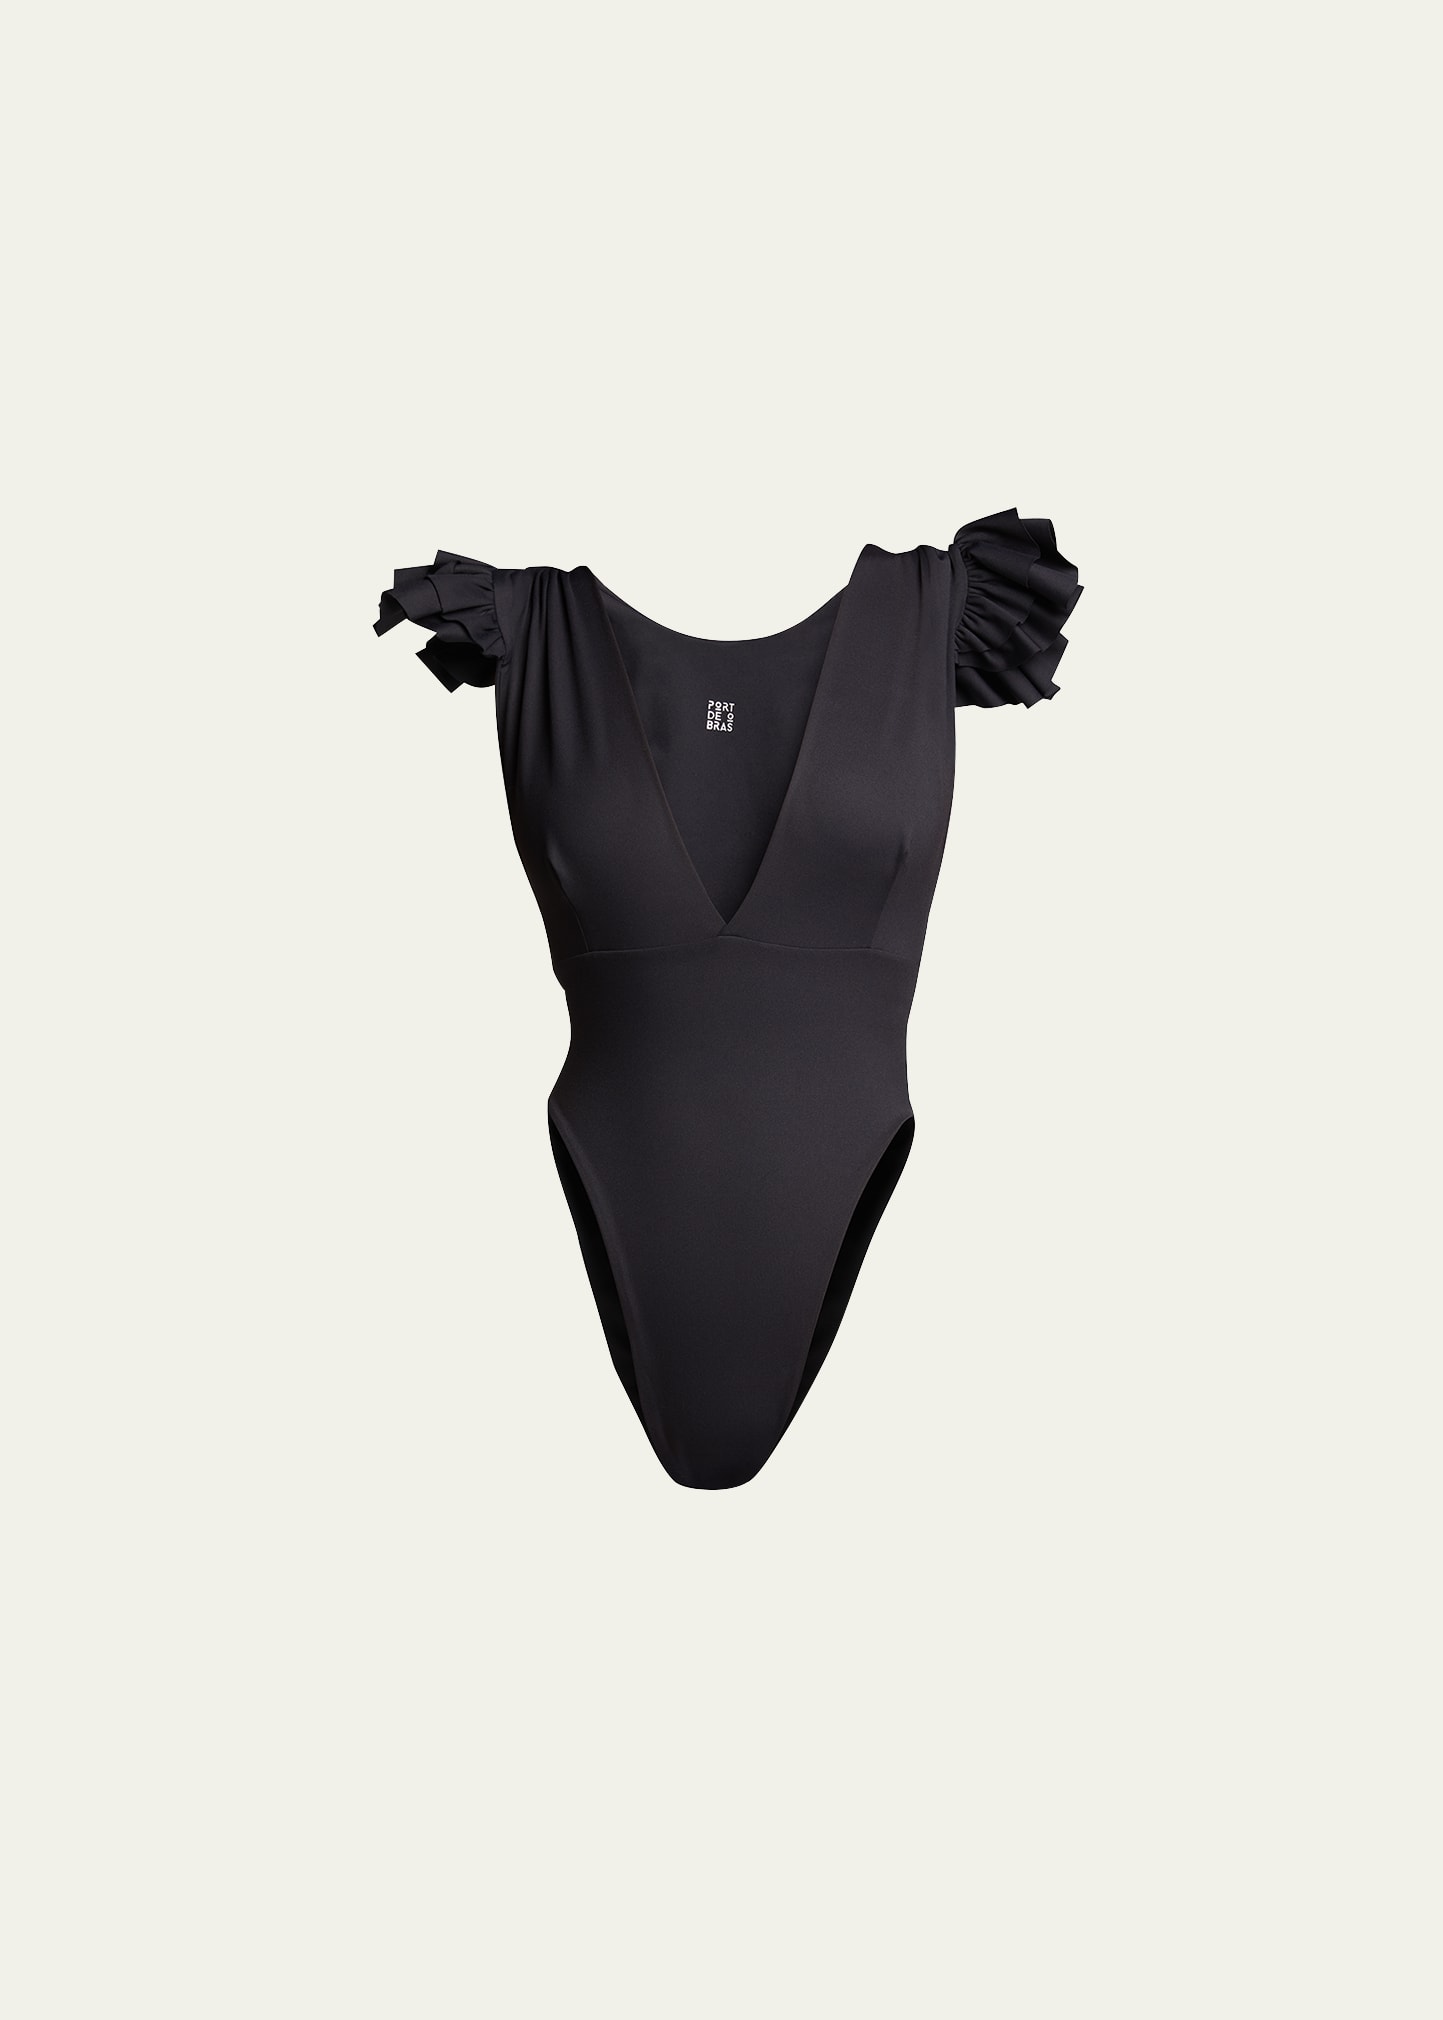 Antillas Ruffled-Shoulder One-Piece Swimsuit